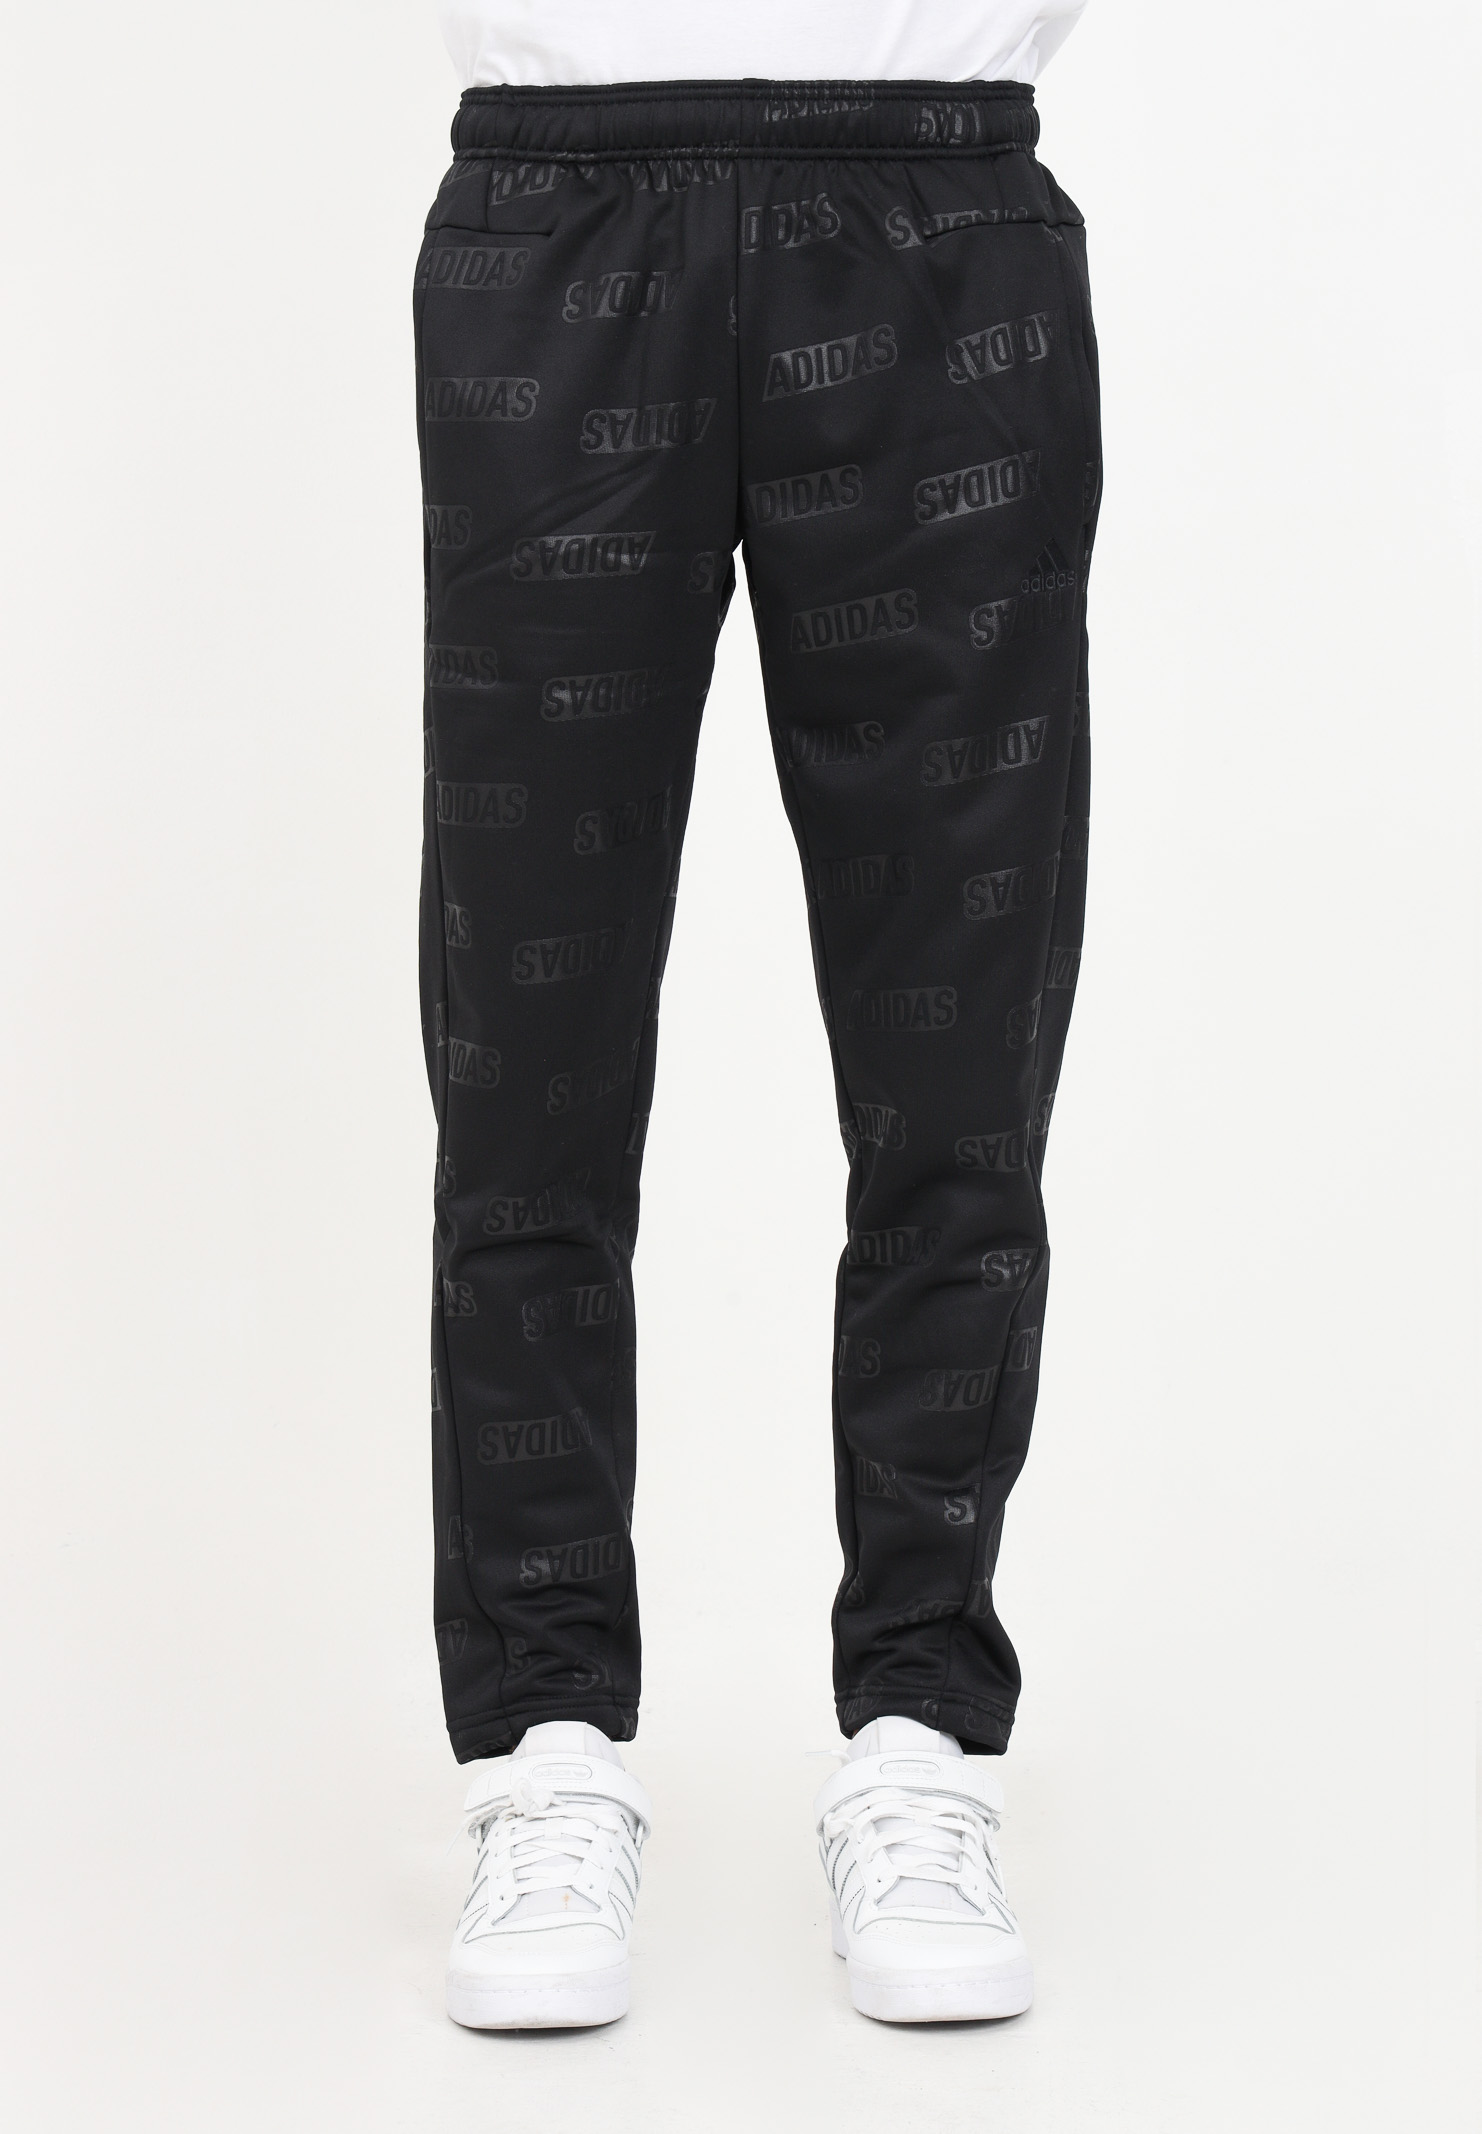 Black tracksuit trousers for men - ADIDAS PERFORMANCE - Pavidas